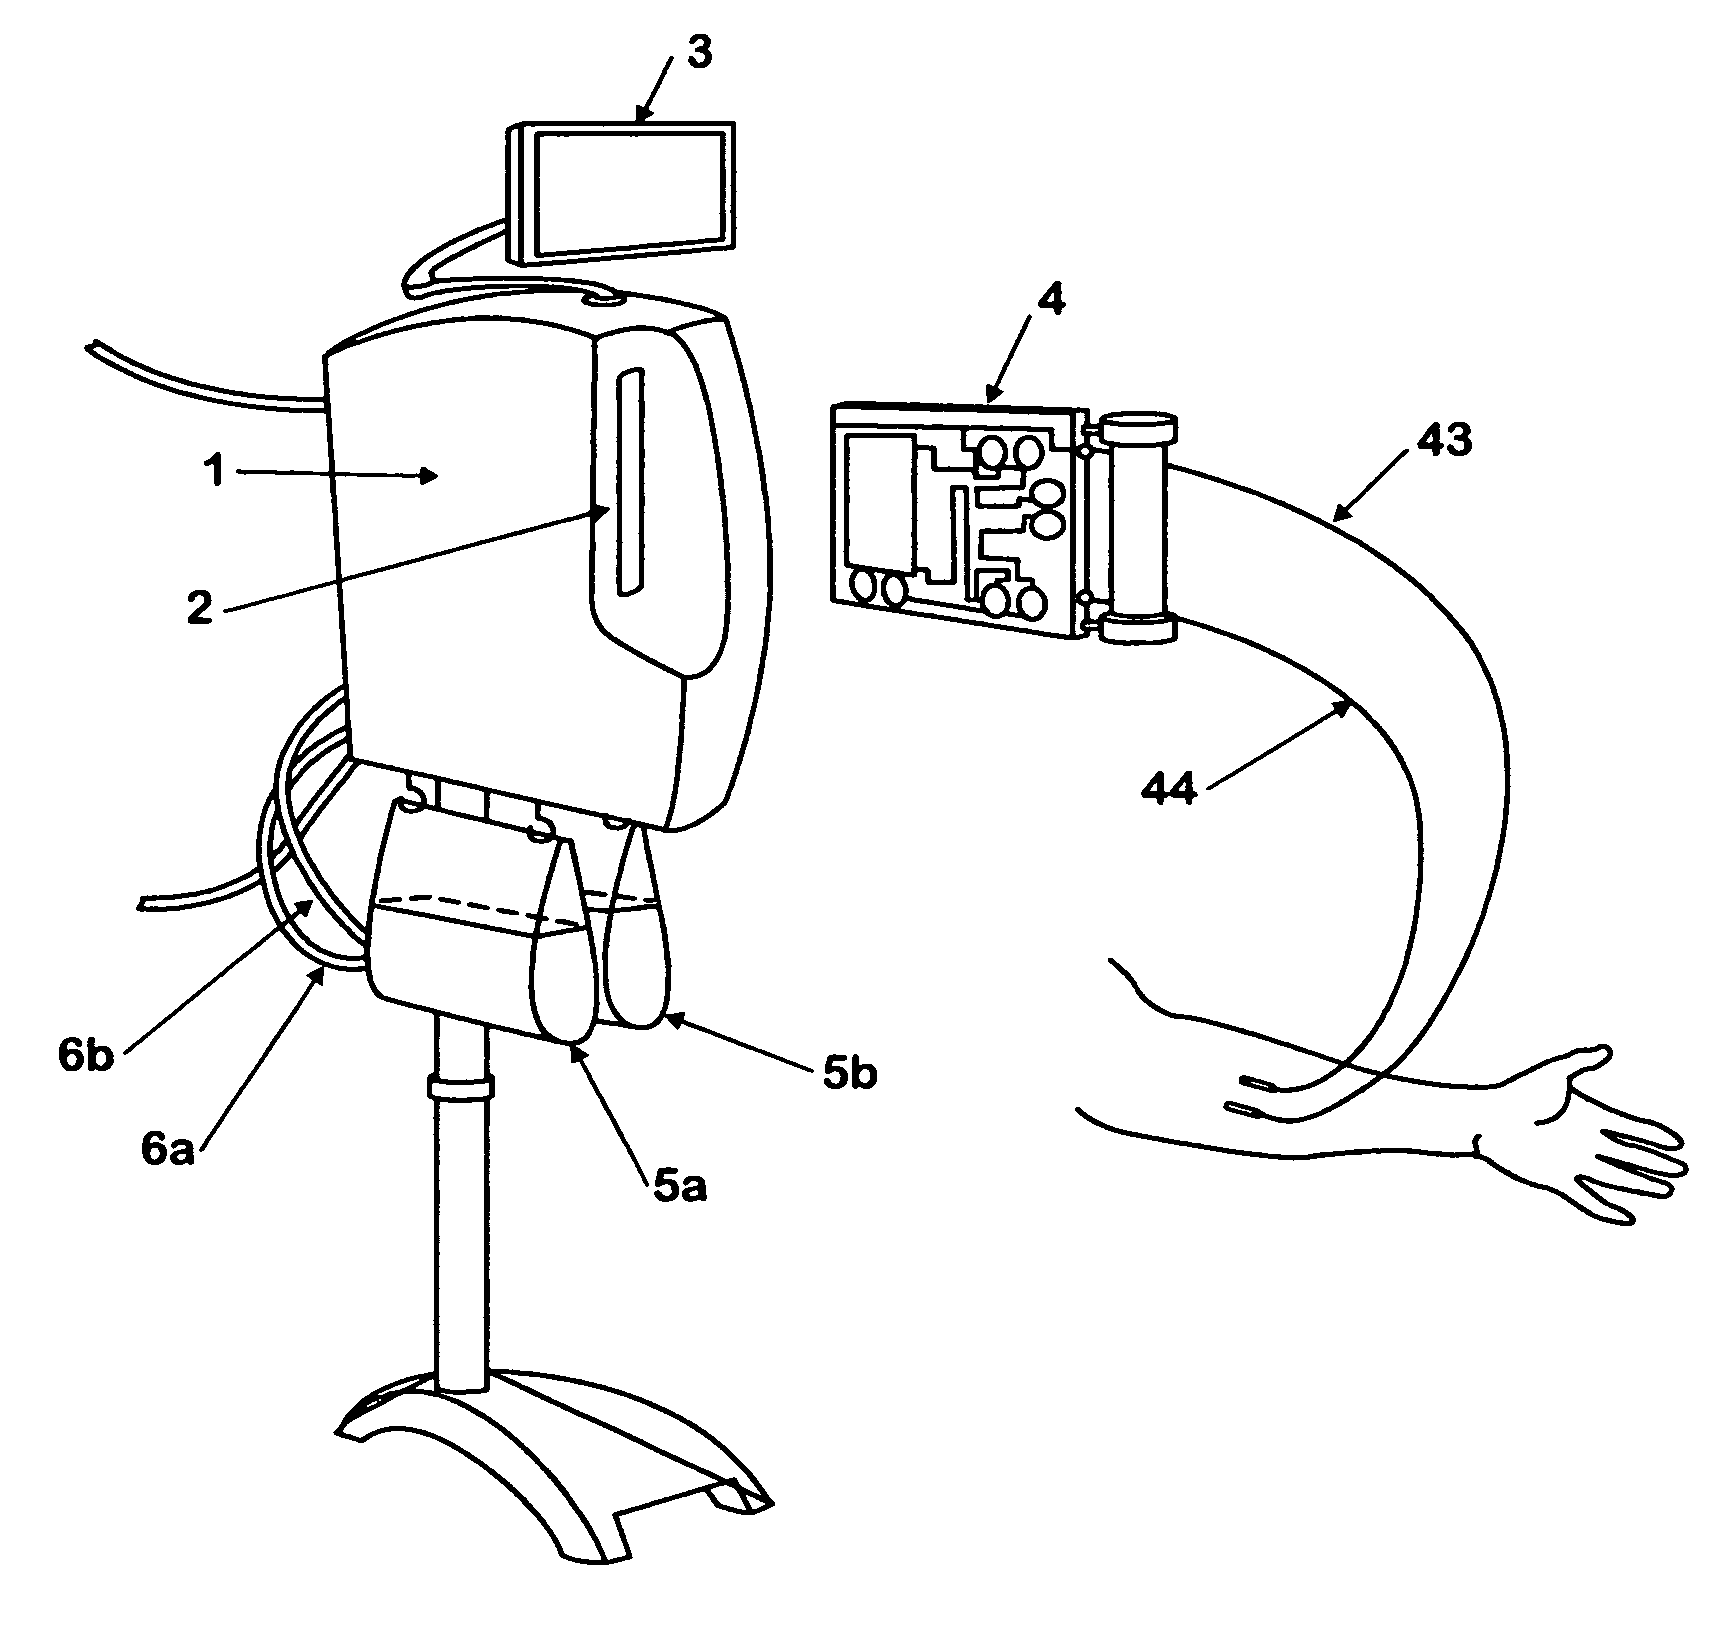 Fluid processing apparatus